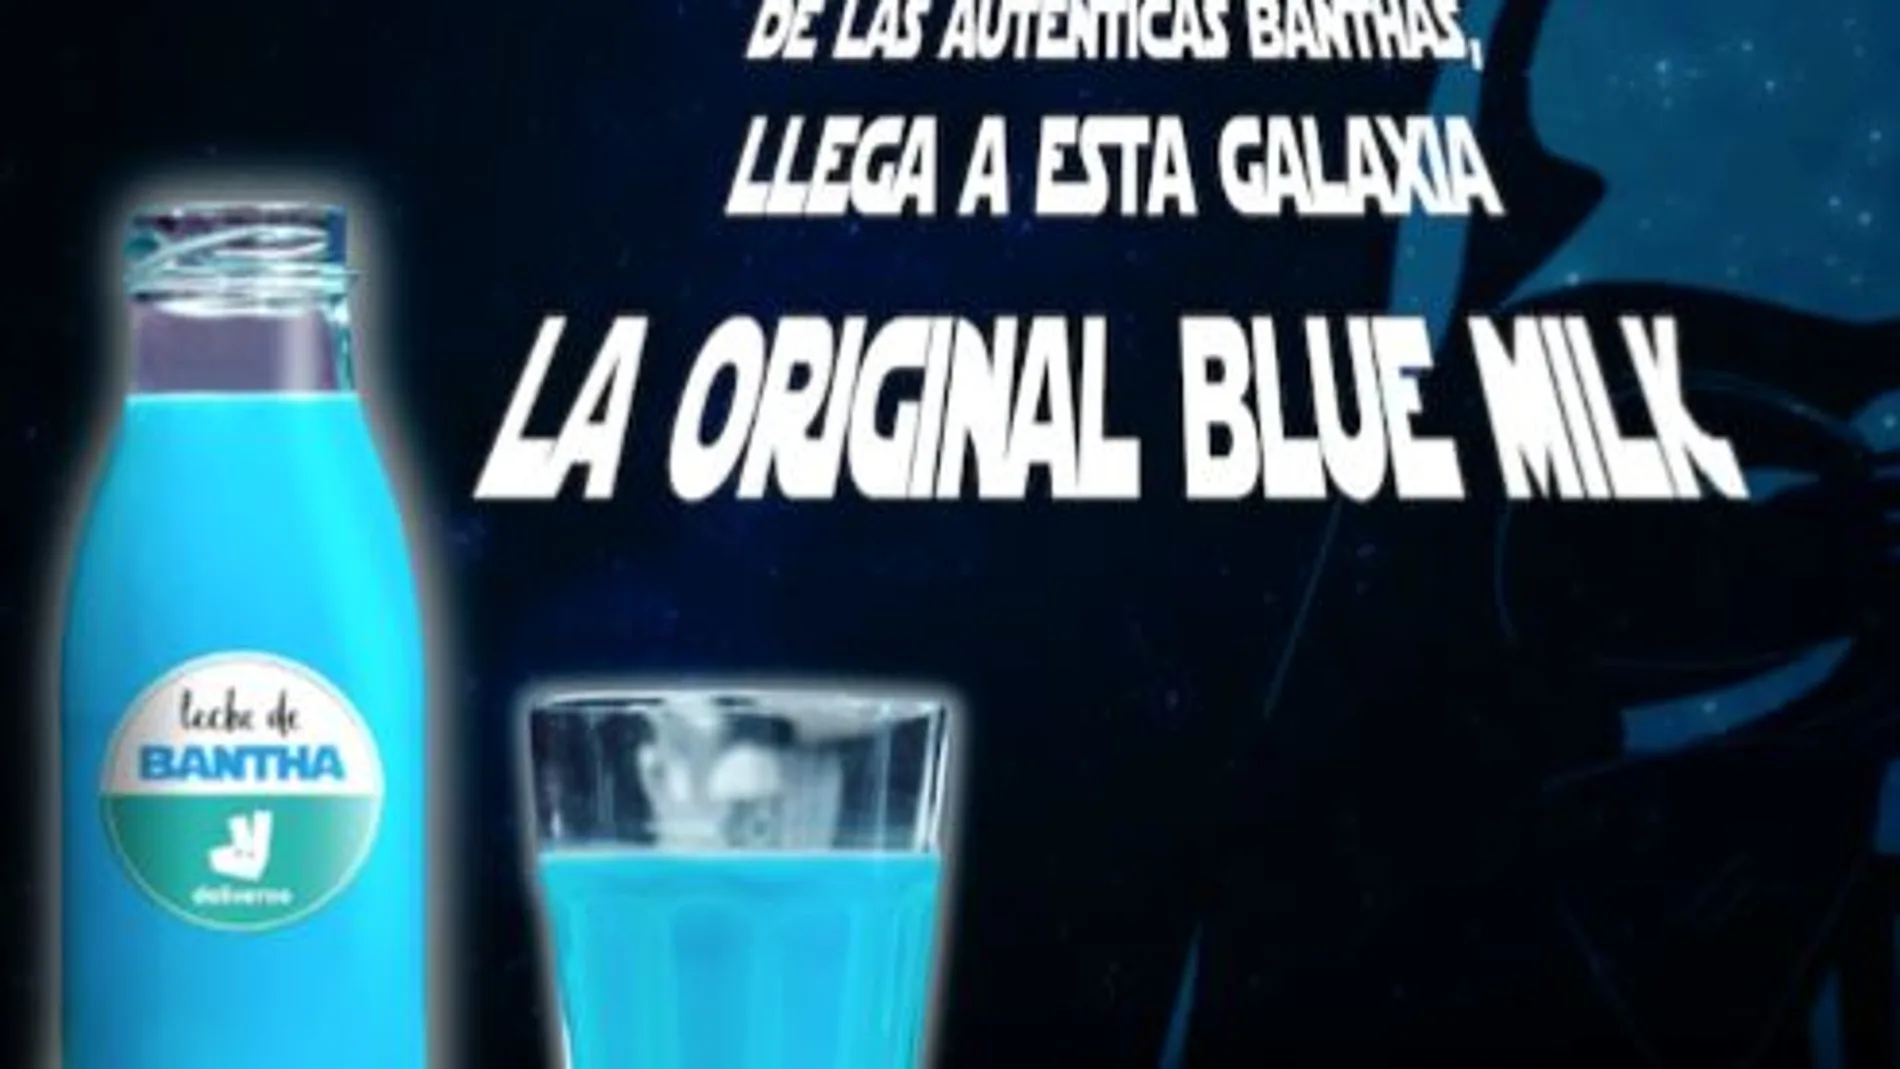 Blue Milk